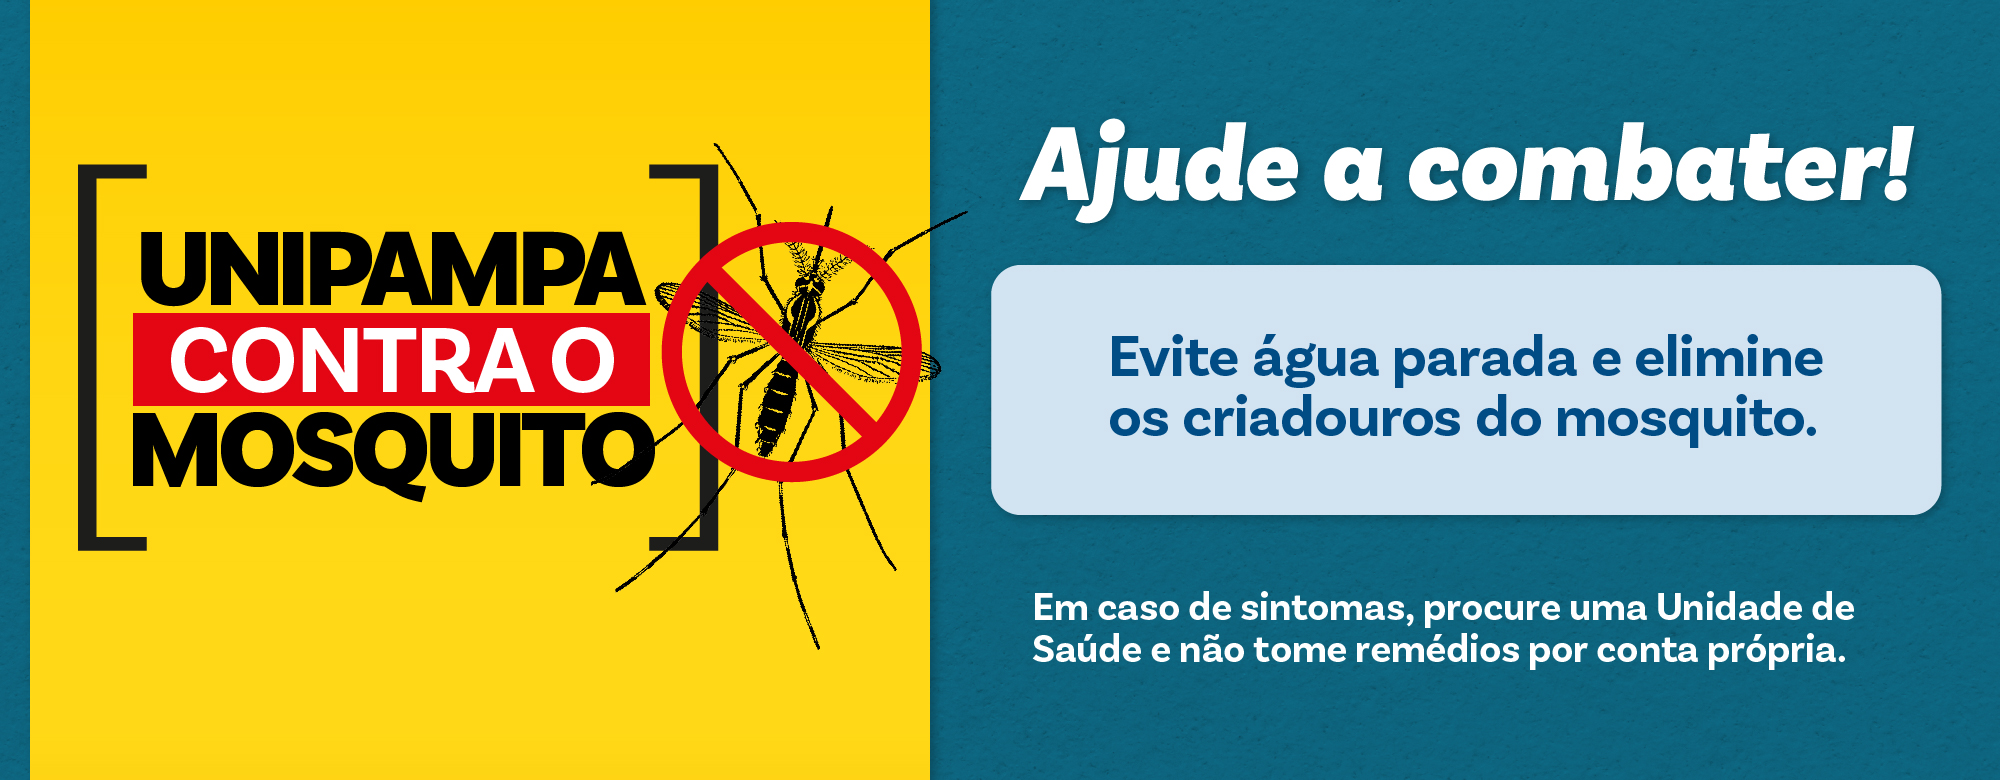 Unipampa Contra o Mosquito. Ajude a combater!